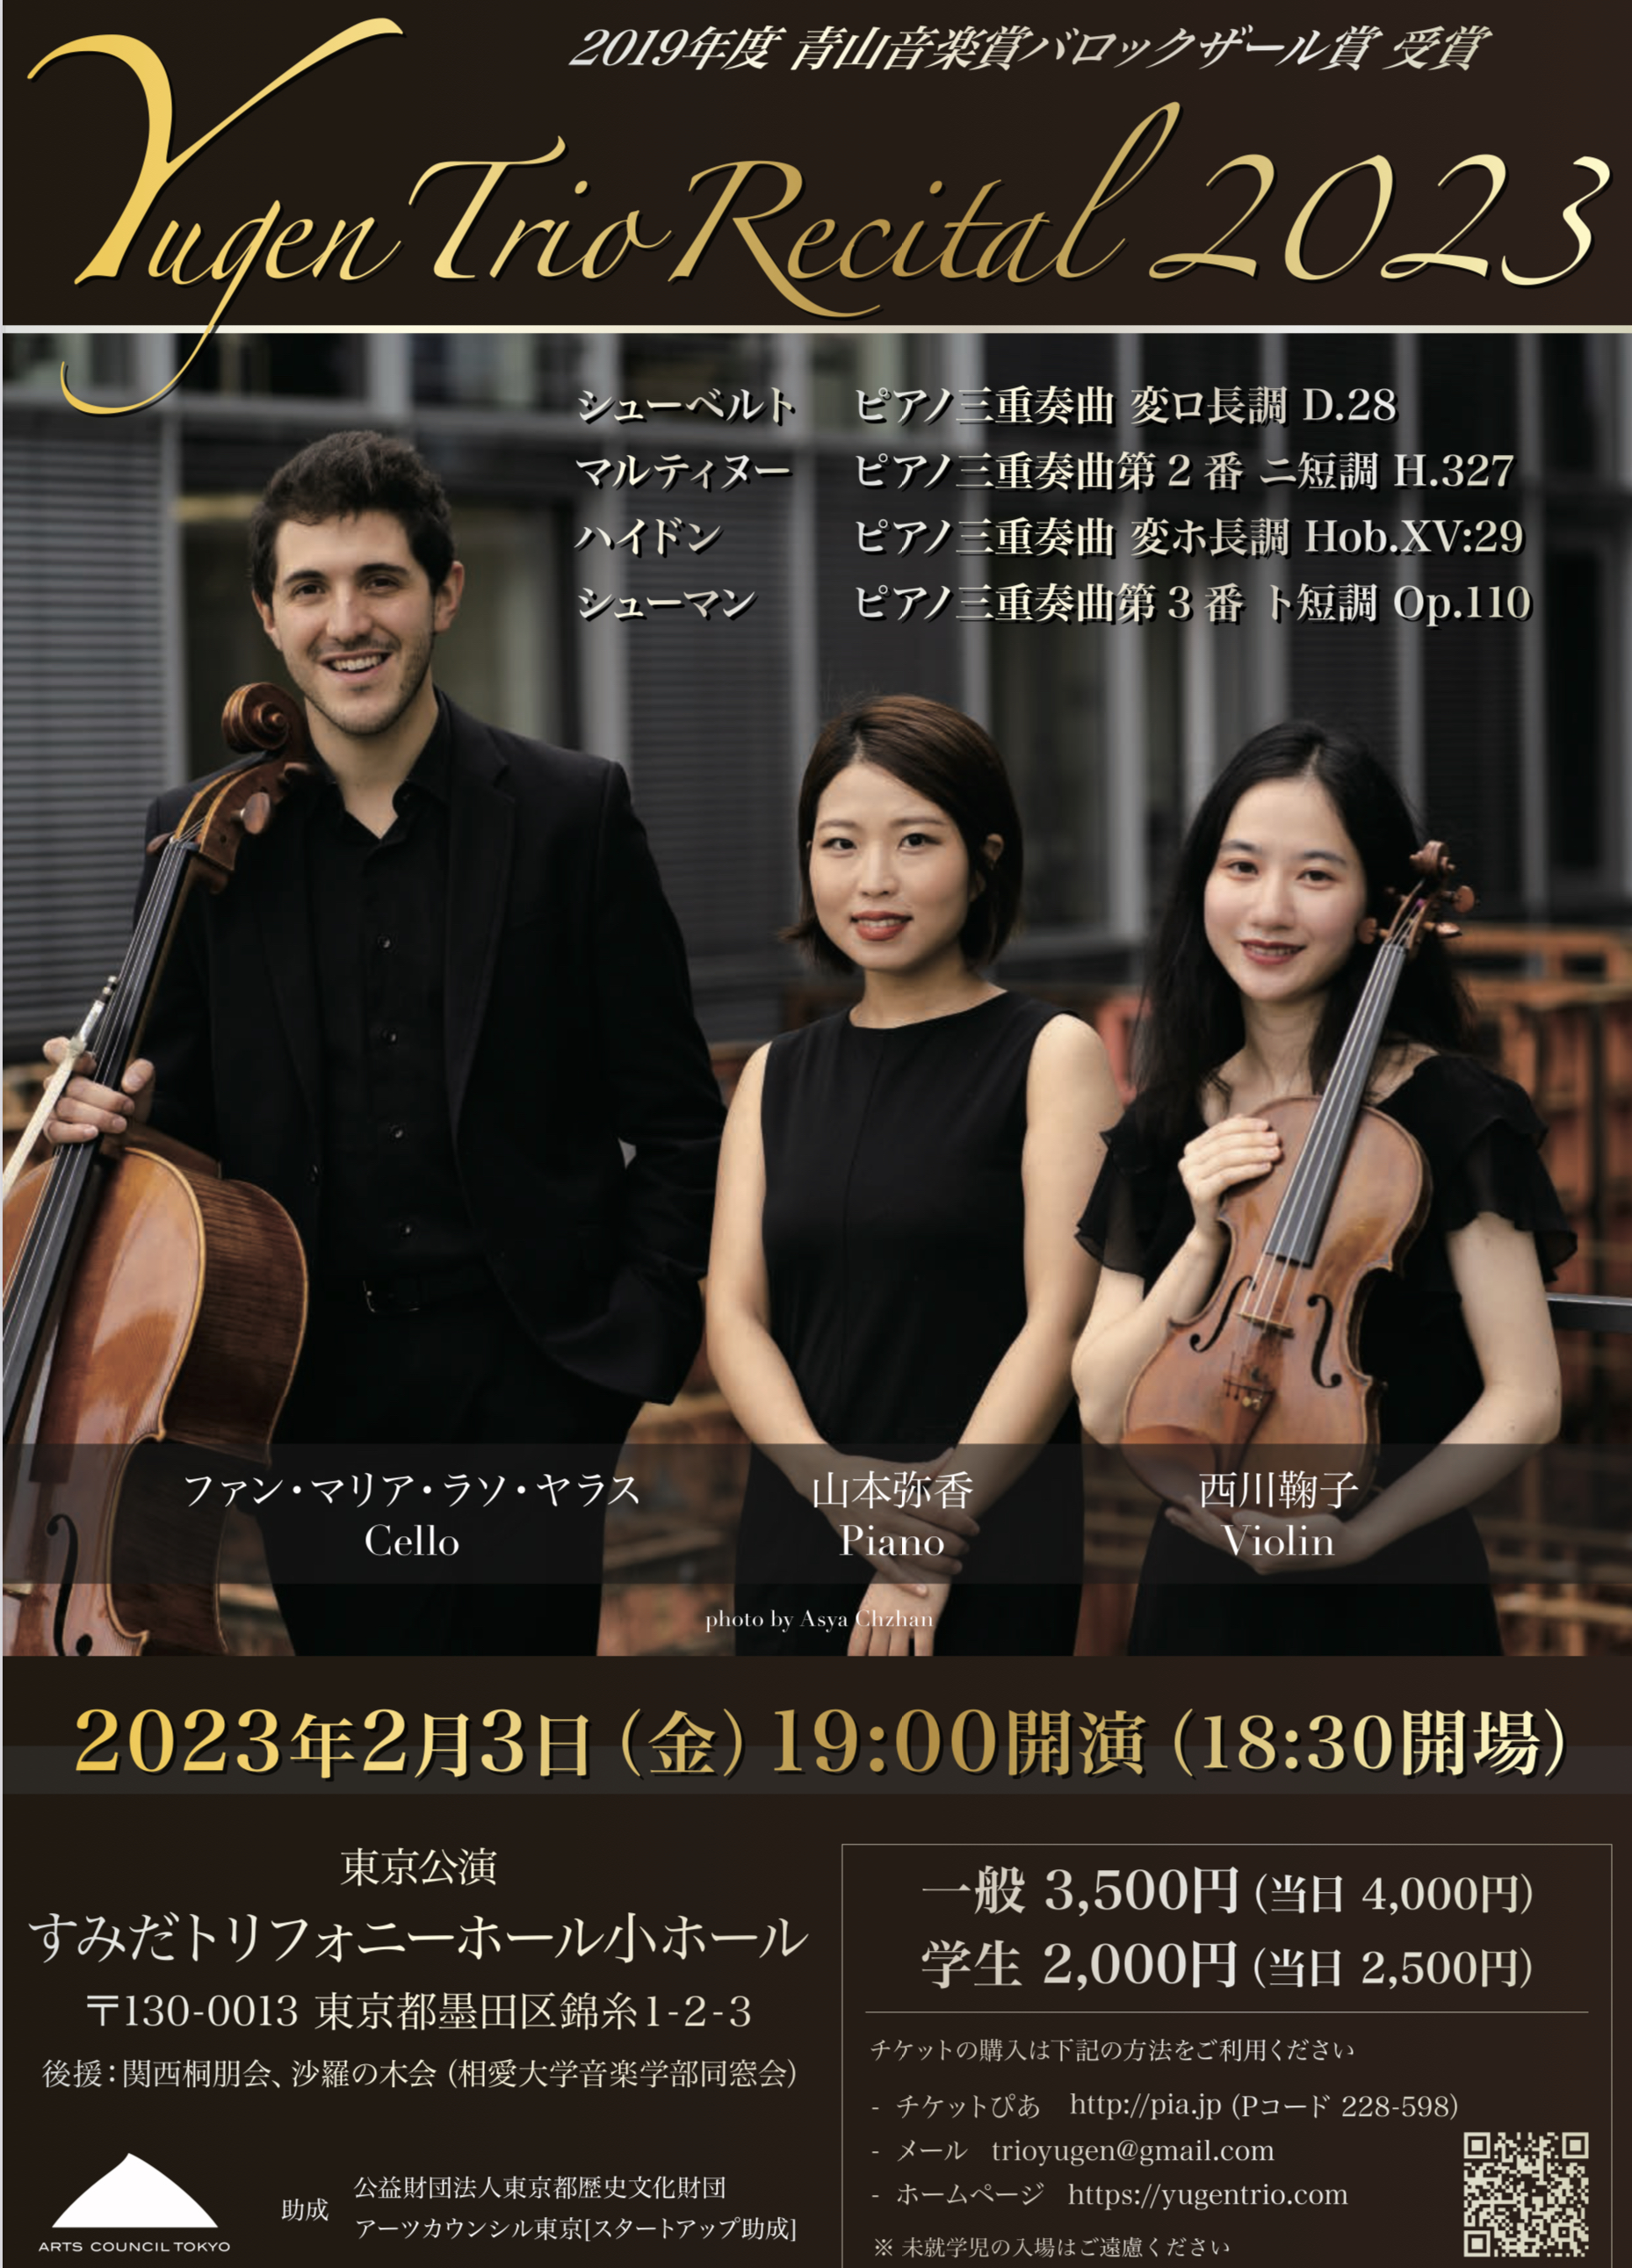 Yugen Trio Recital 2023